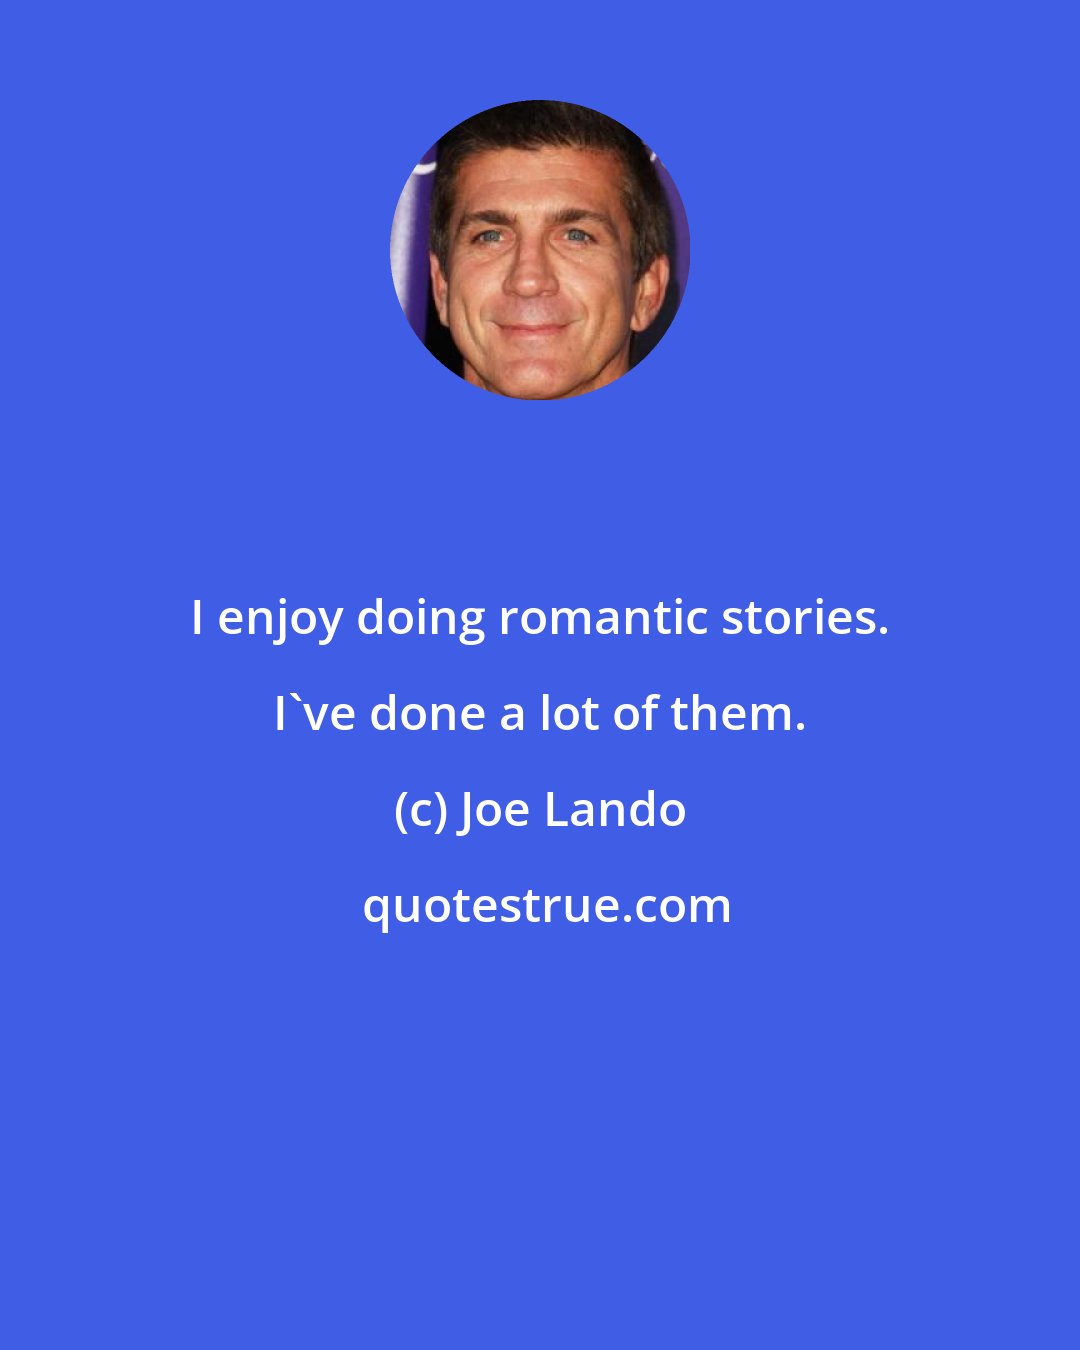 Joe Lando: I enjoy doing romantic stories. I've done a lot of them.